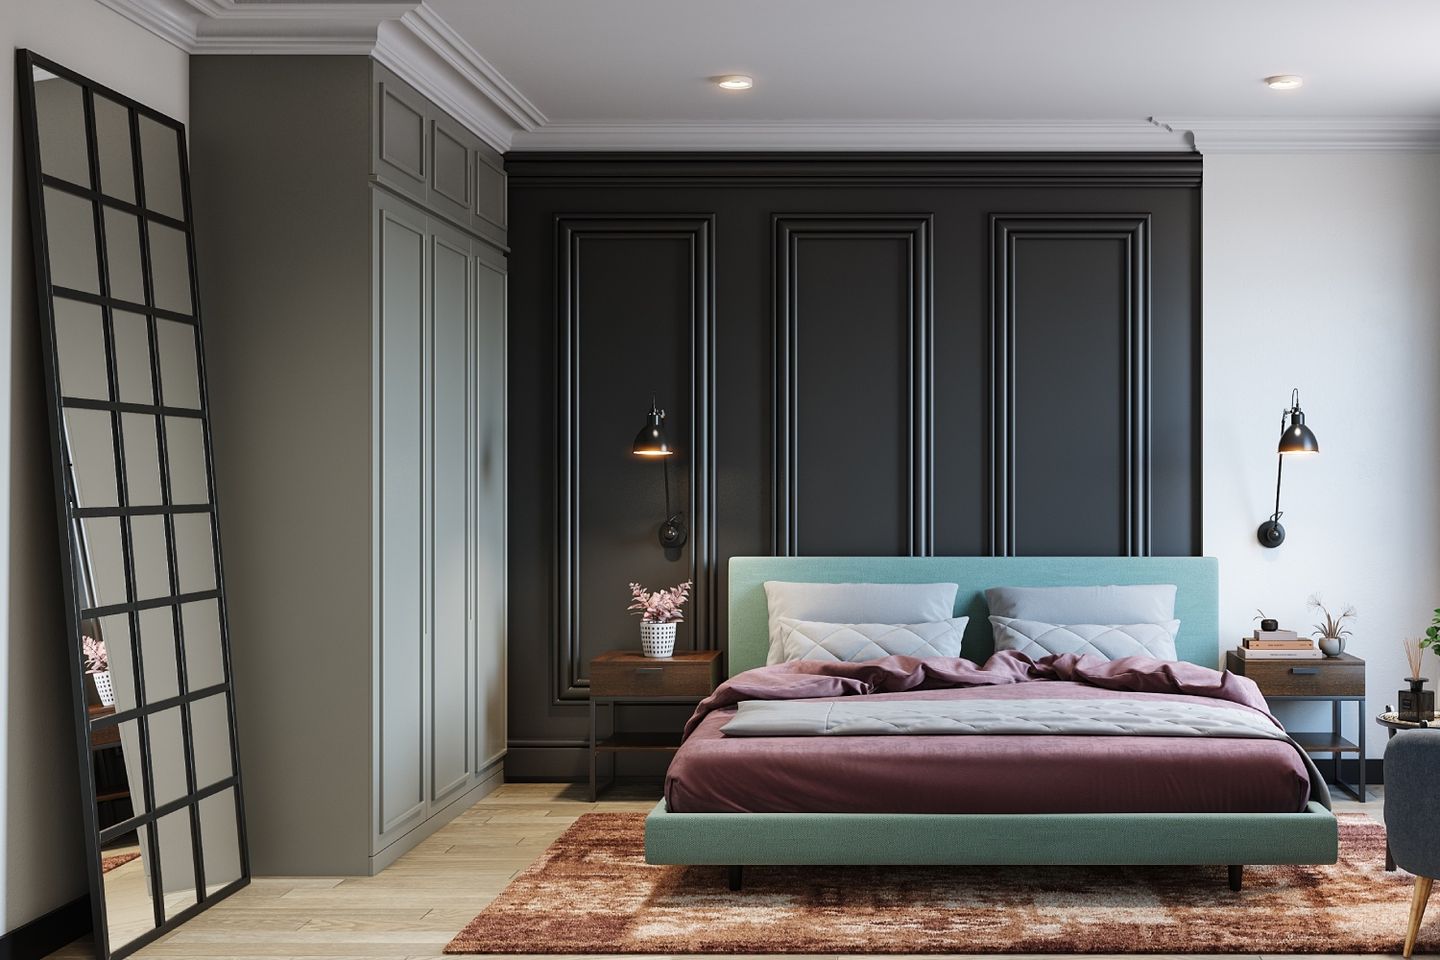 Bedroom Wall Design With Dark Grey Trims - Livspace